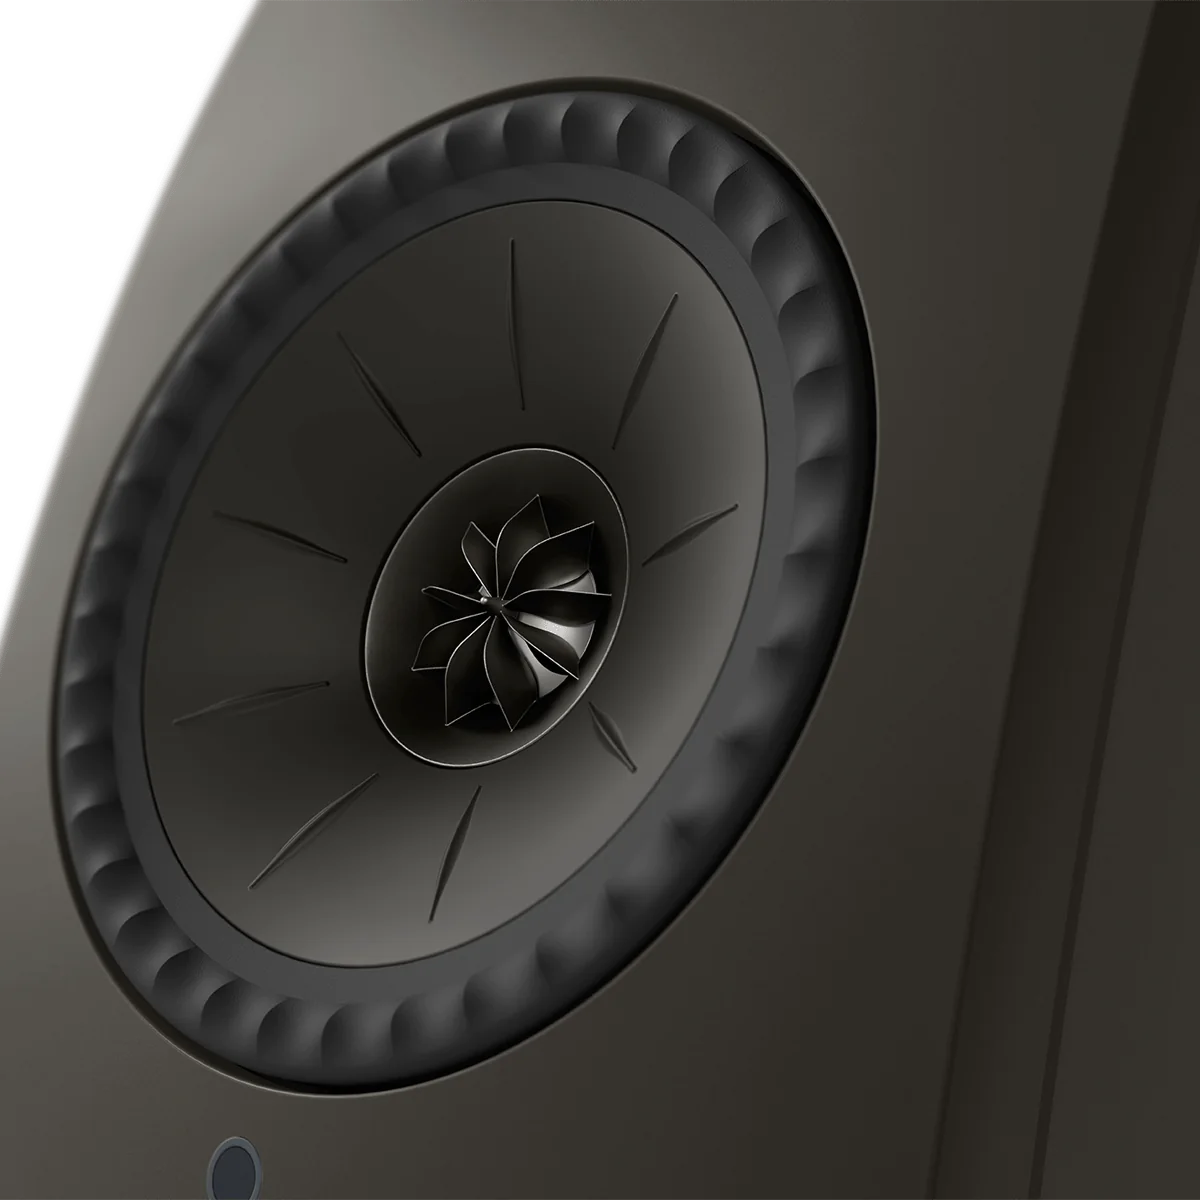 KEF LSX II LT Wireless Active Hi-Fi Speakers #colour_graphite grey